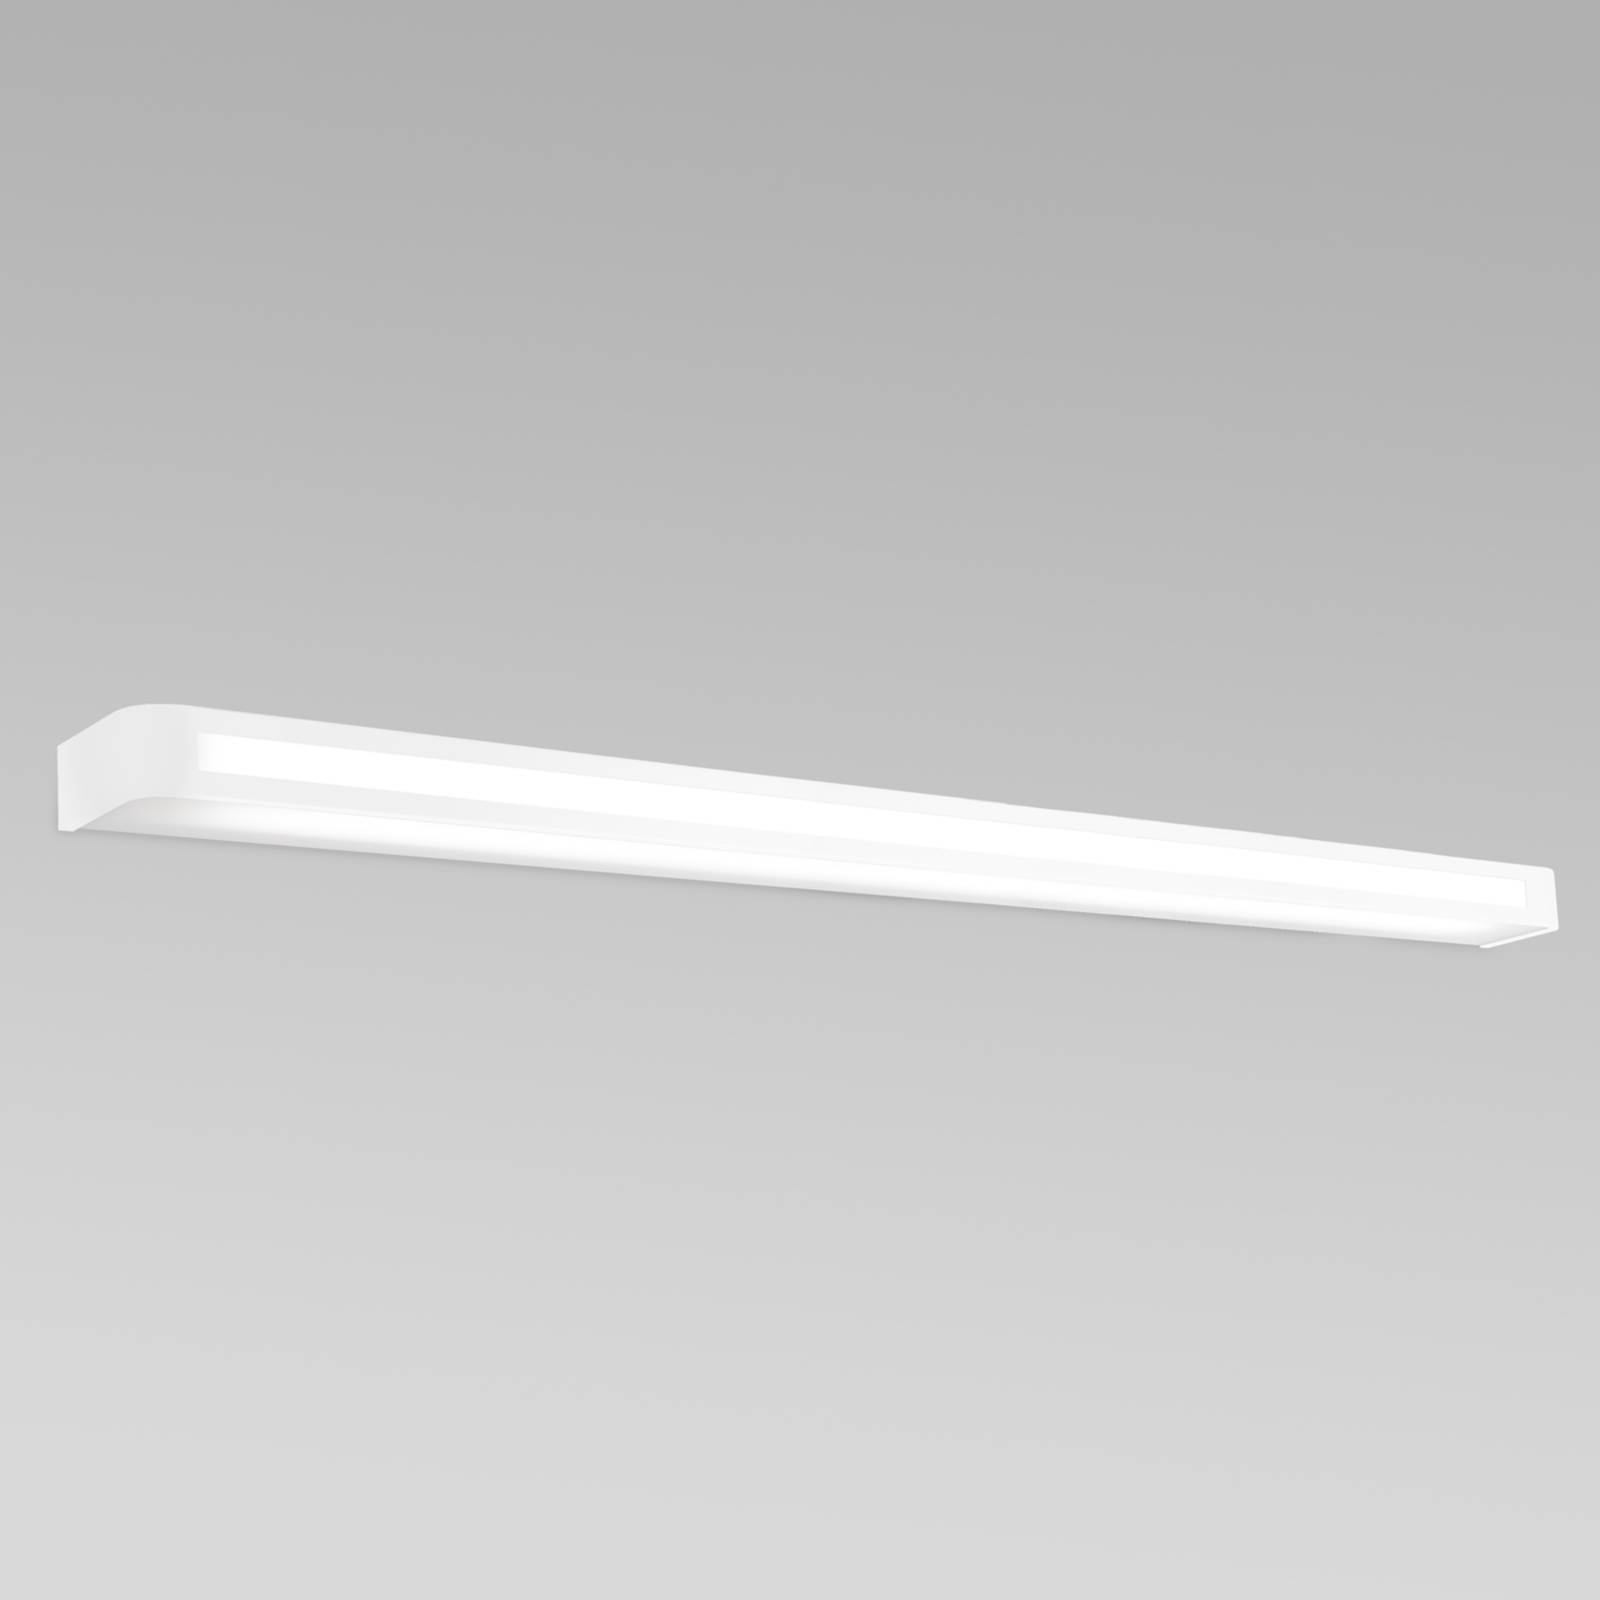 Pujol iluminación időtlen led fali lámpa arcos, ip20, 120 cm, fehér